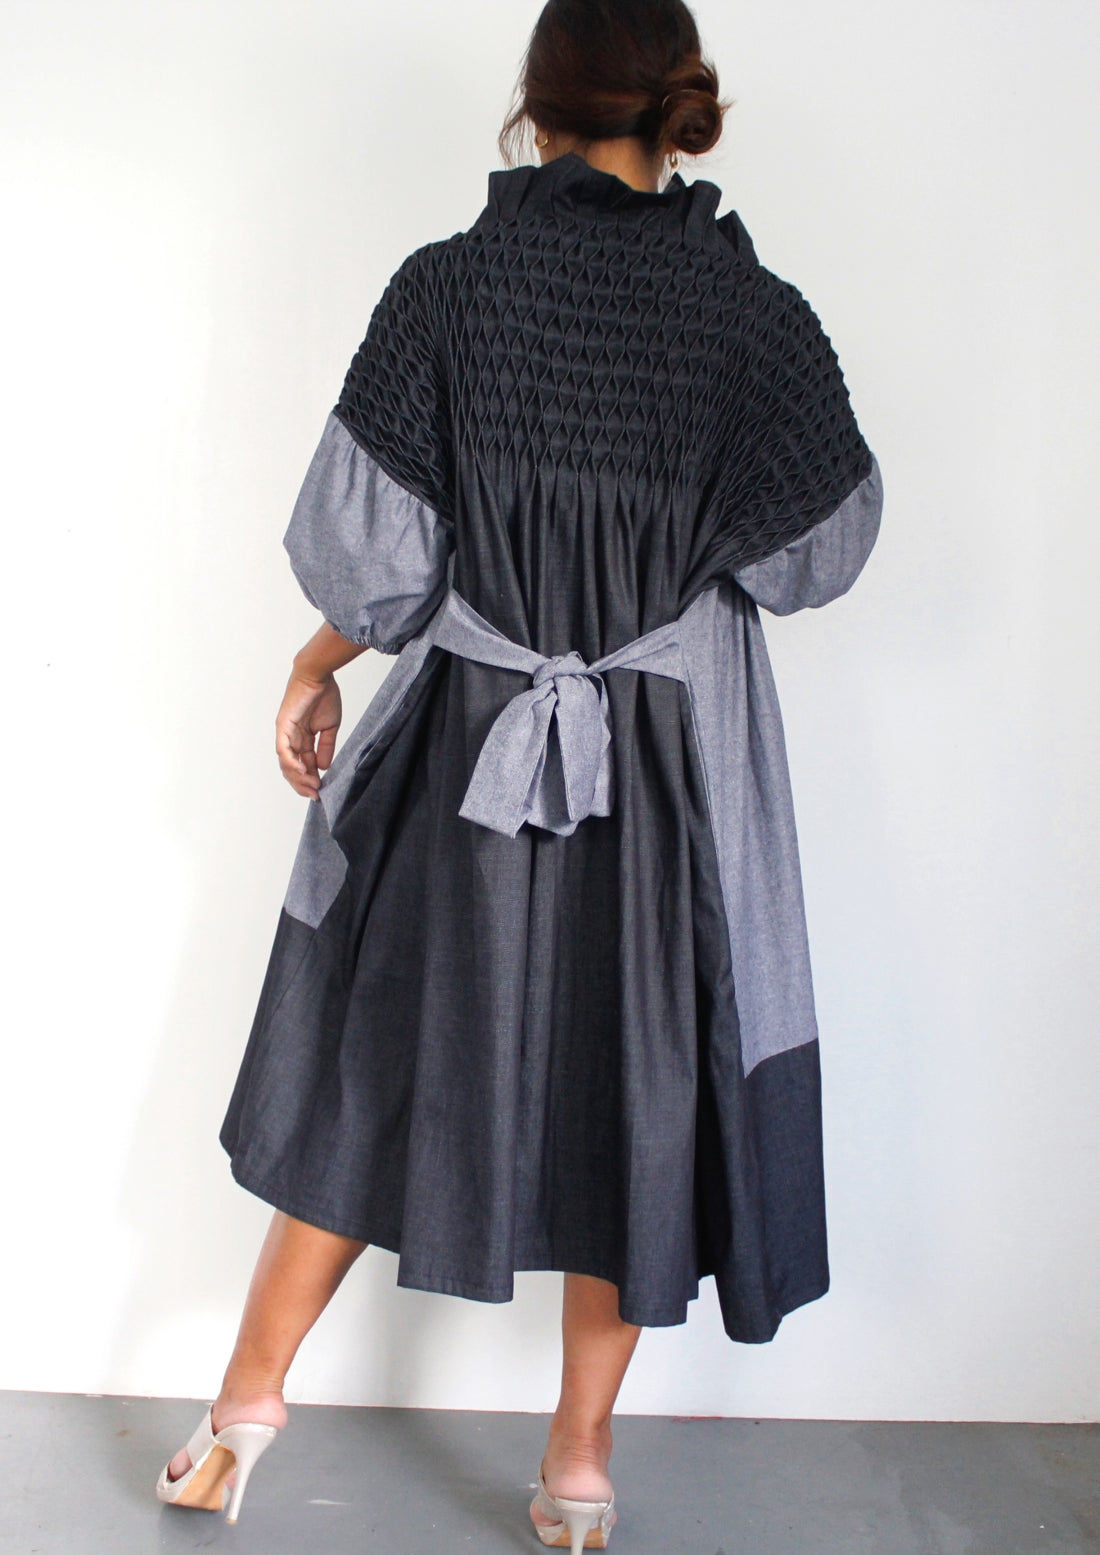 leila dress - chambray & black